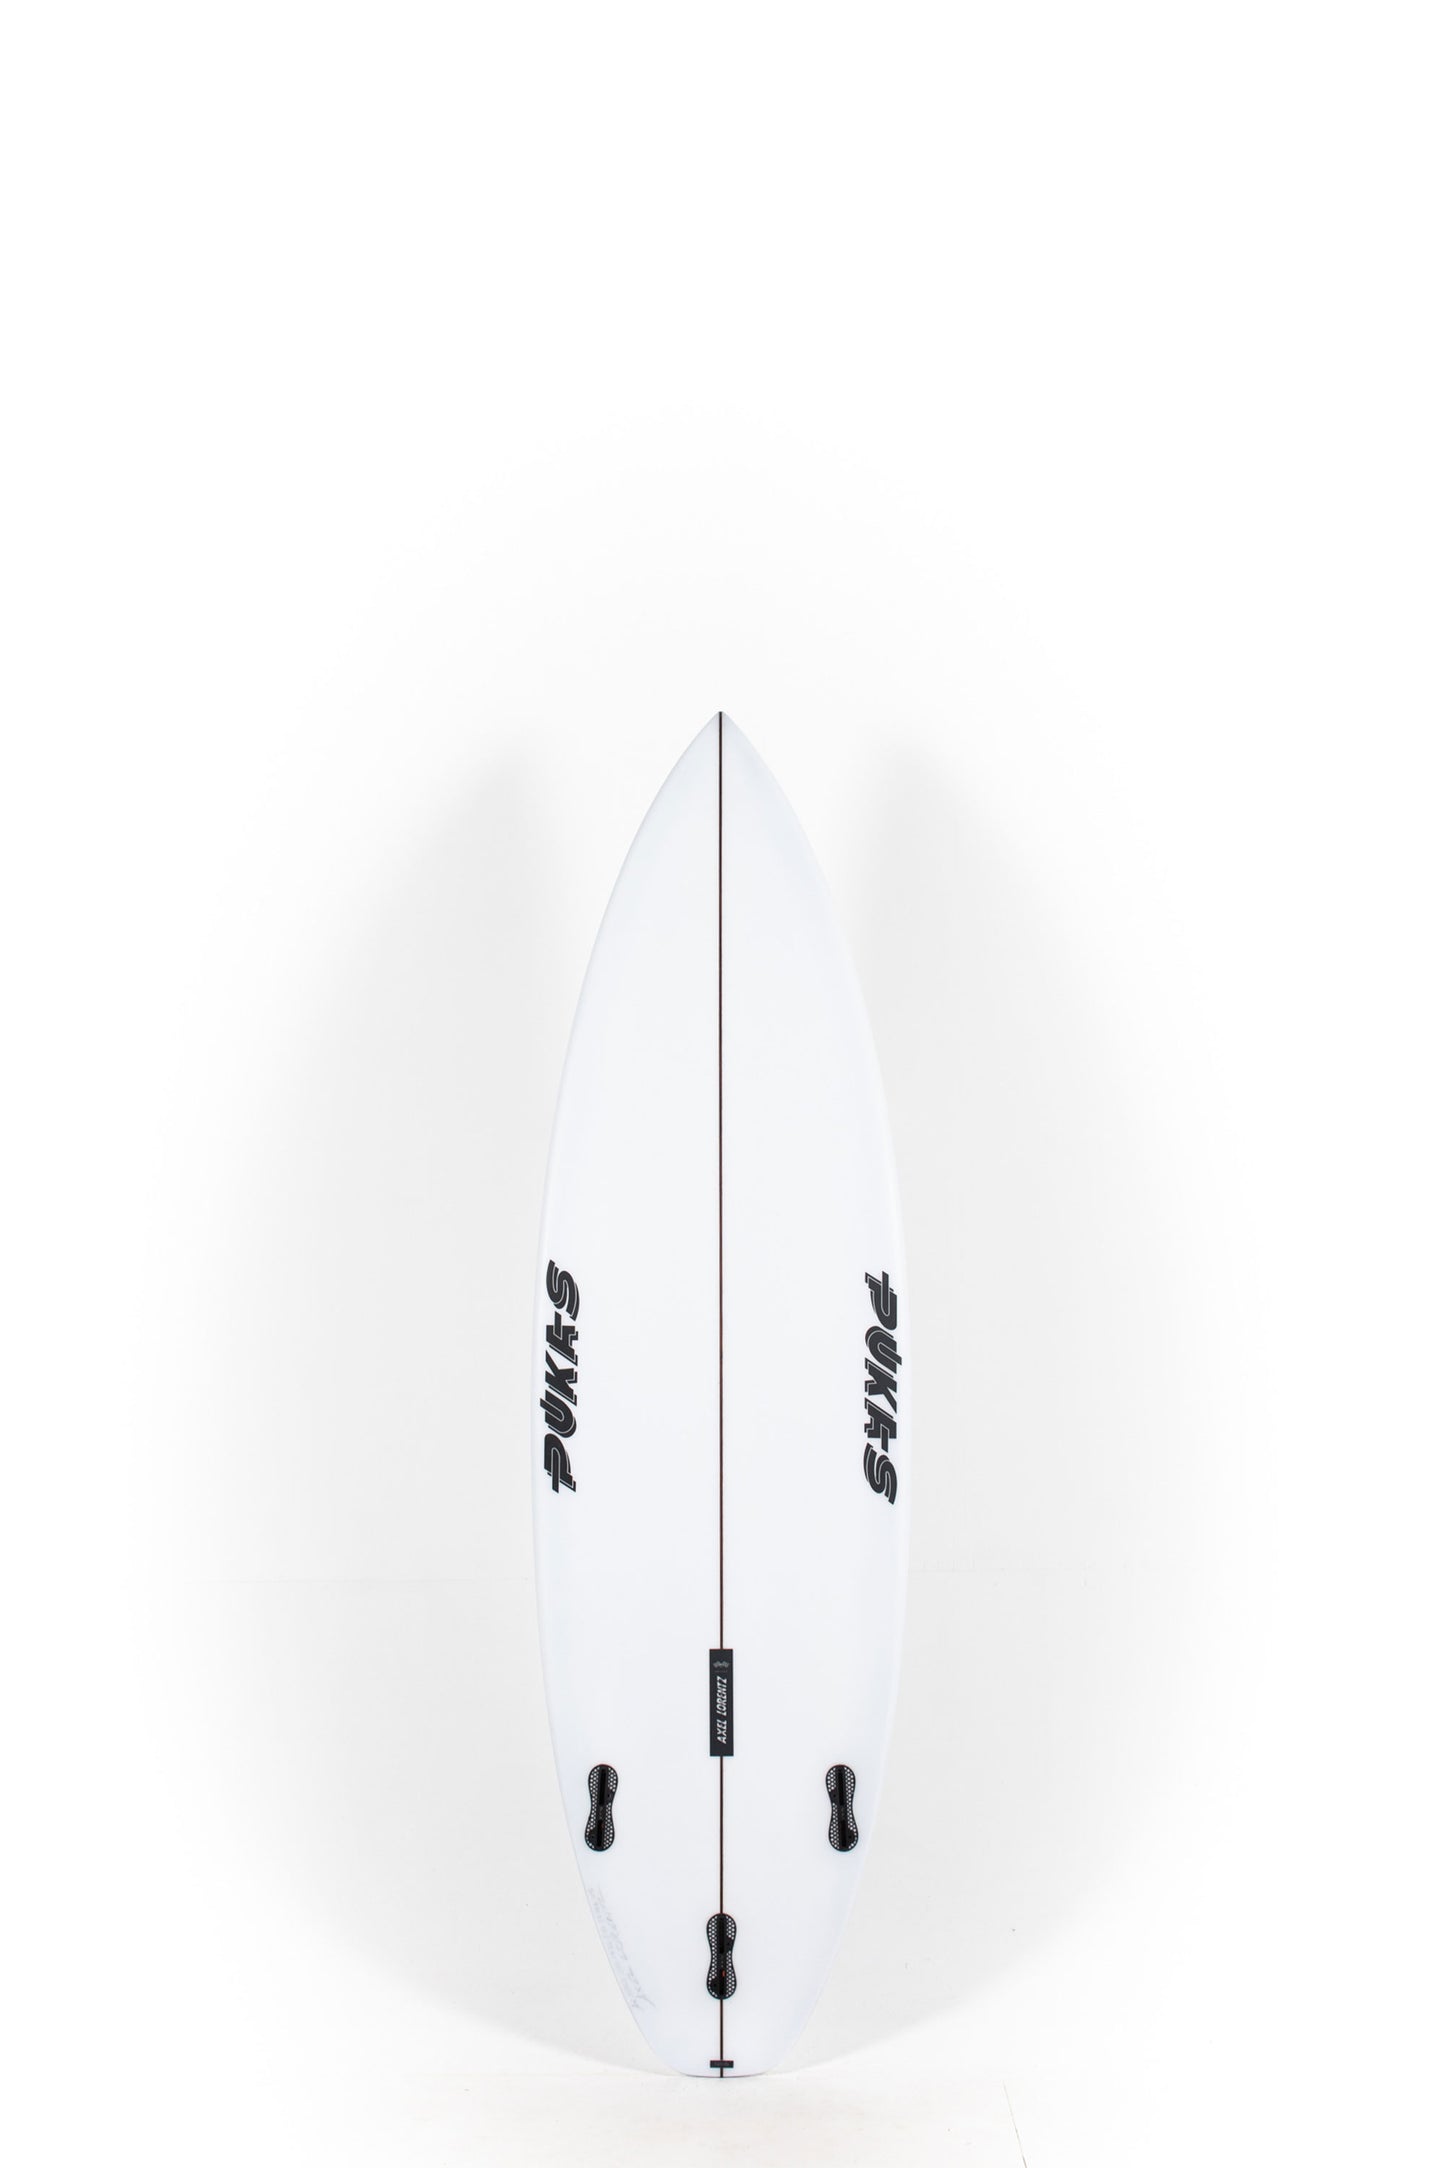 Pukas Surf Shop - Pukas Surfboard - DARKER by Axel Lorentz - 5'10" x 19,25 x 2,31 x 27,76L. - AX08563